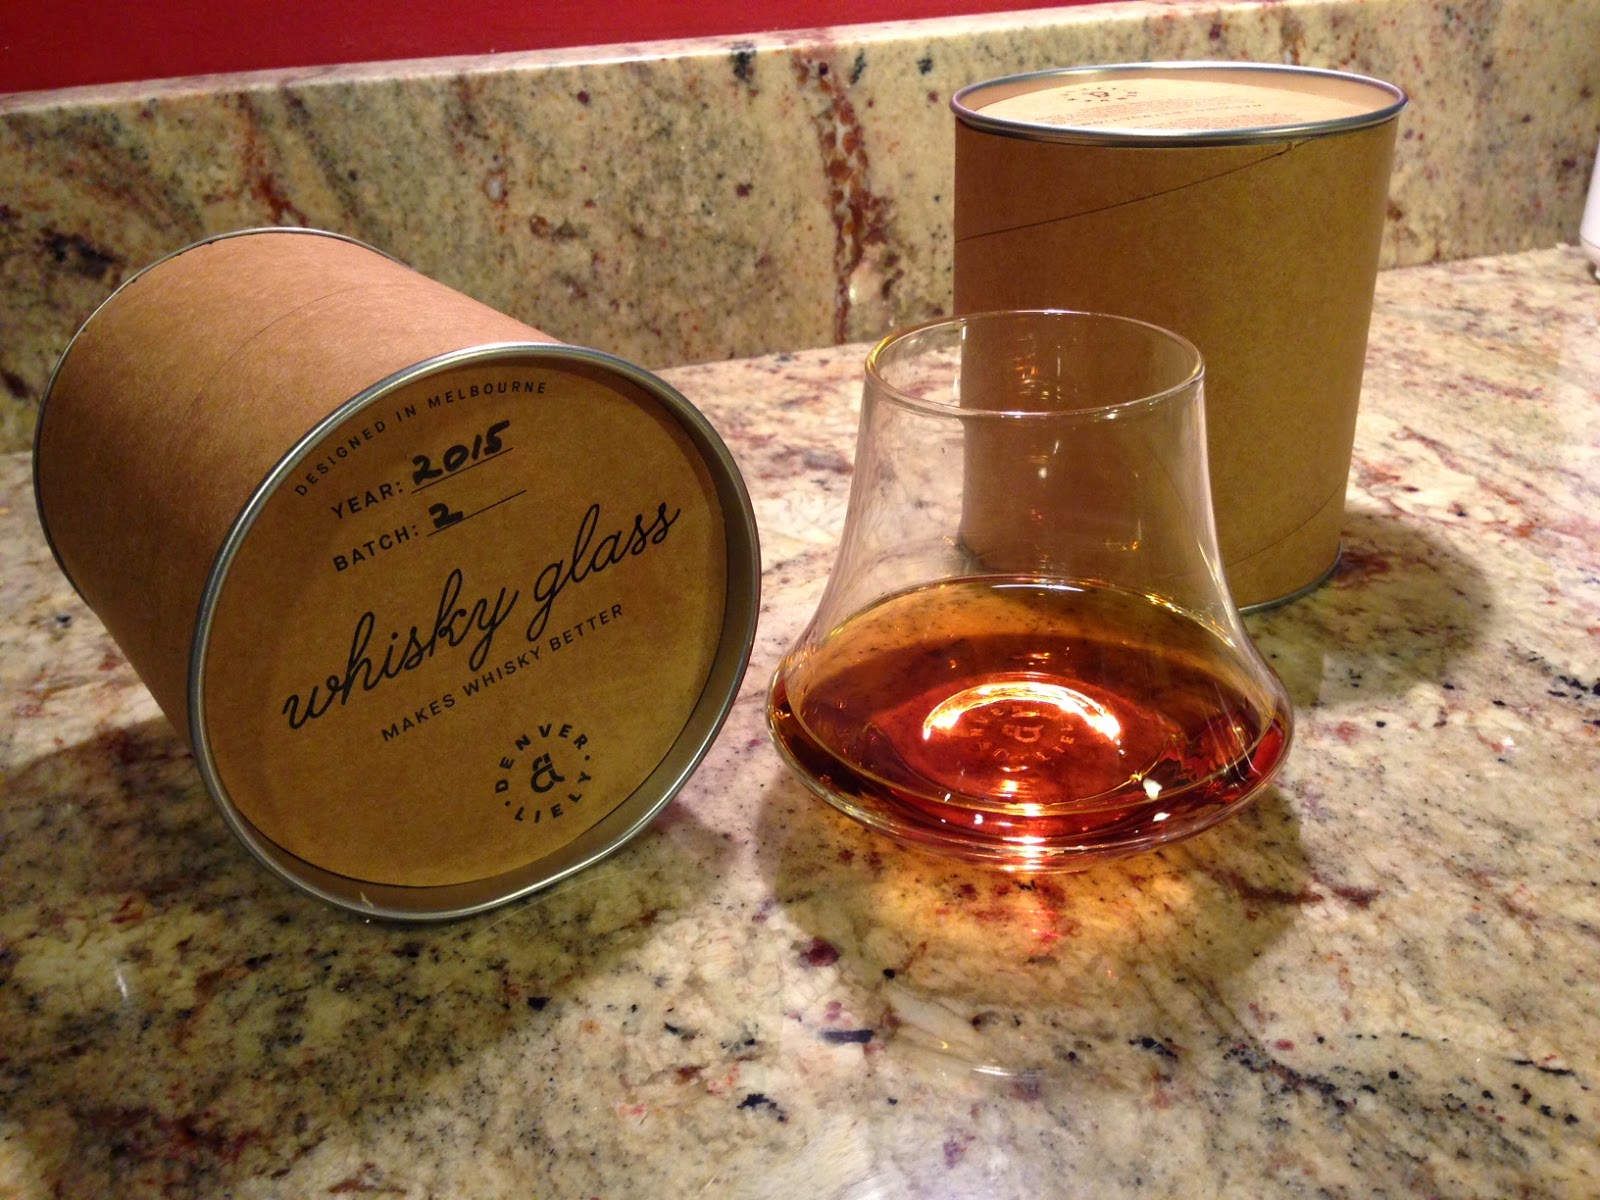 Denver & Liely - Whisky Glass